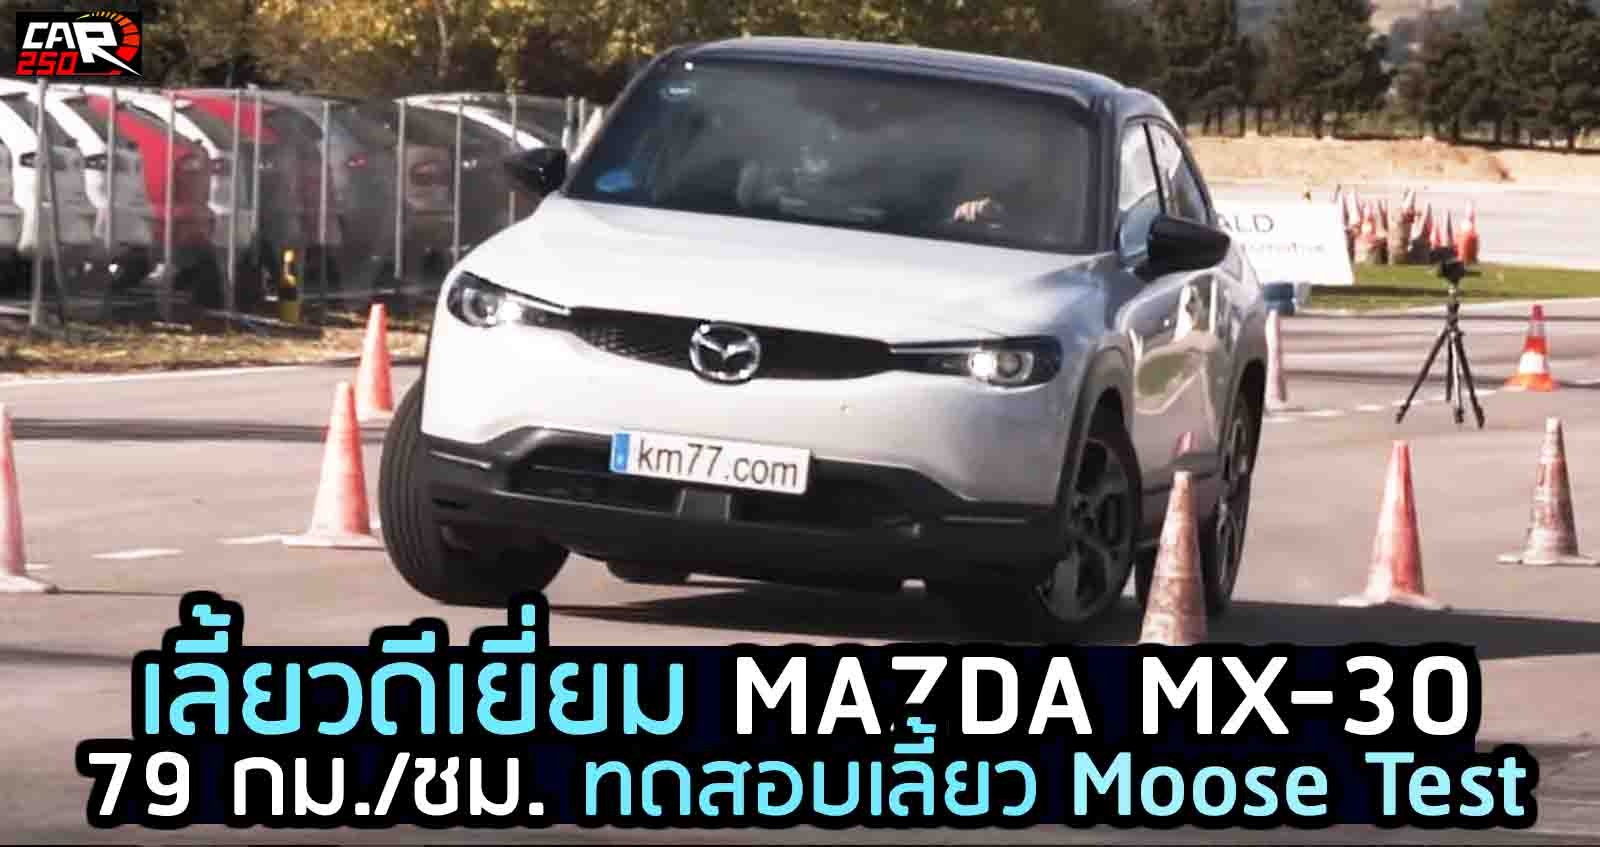 (VDO) เลี้ยวดีเยี่ยม MAZDA MX-30 ทดสอบเลี้ยว Moose Test